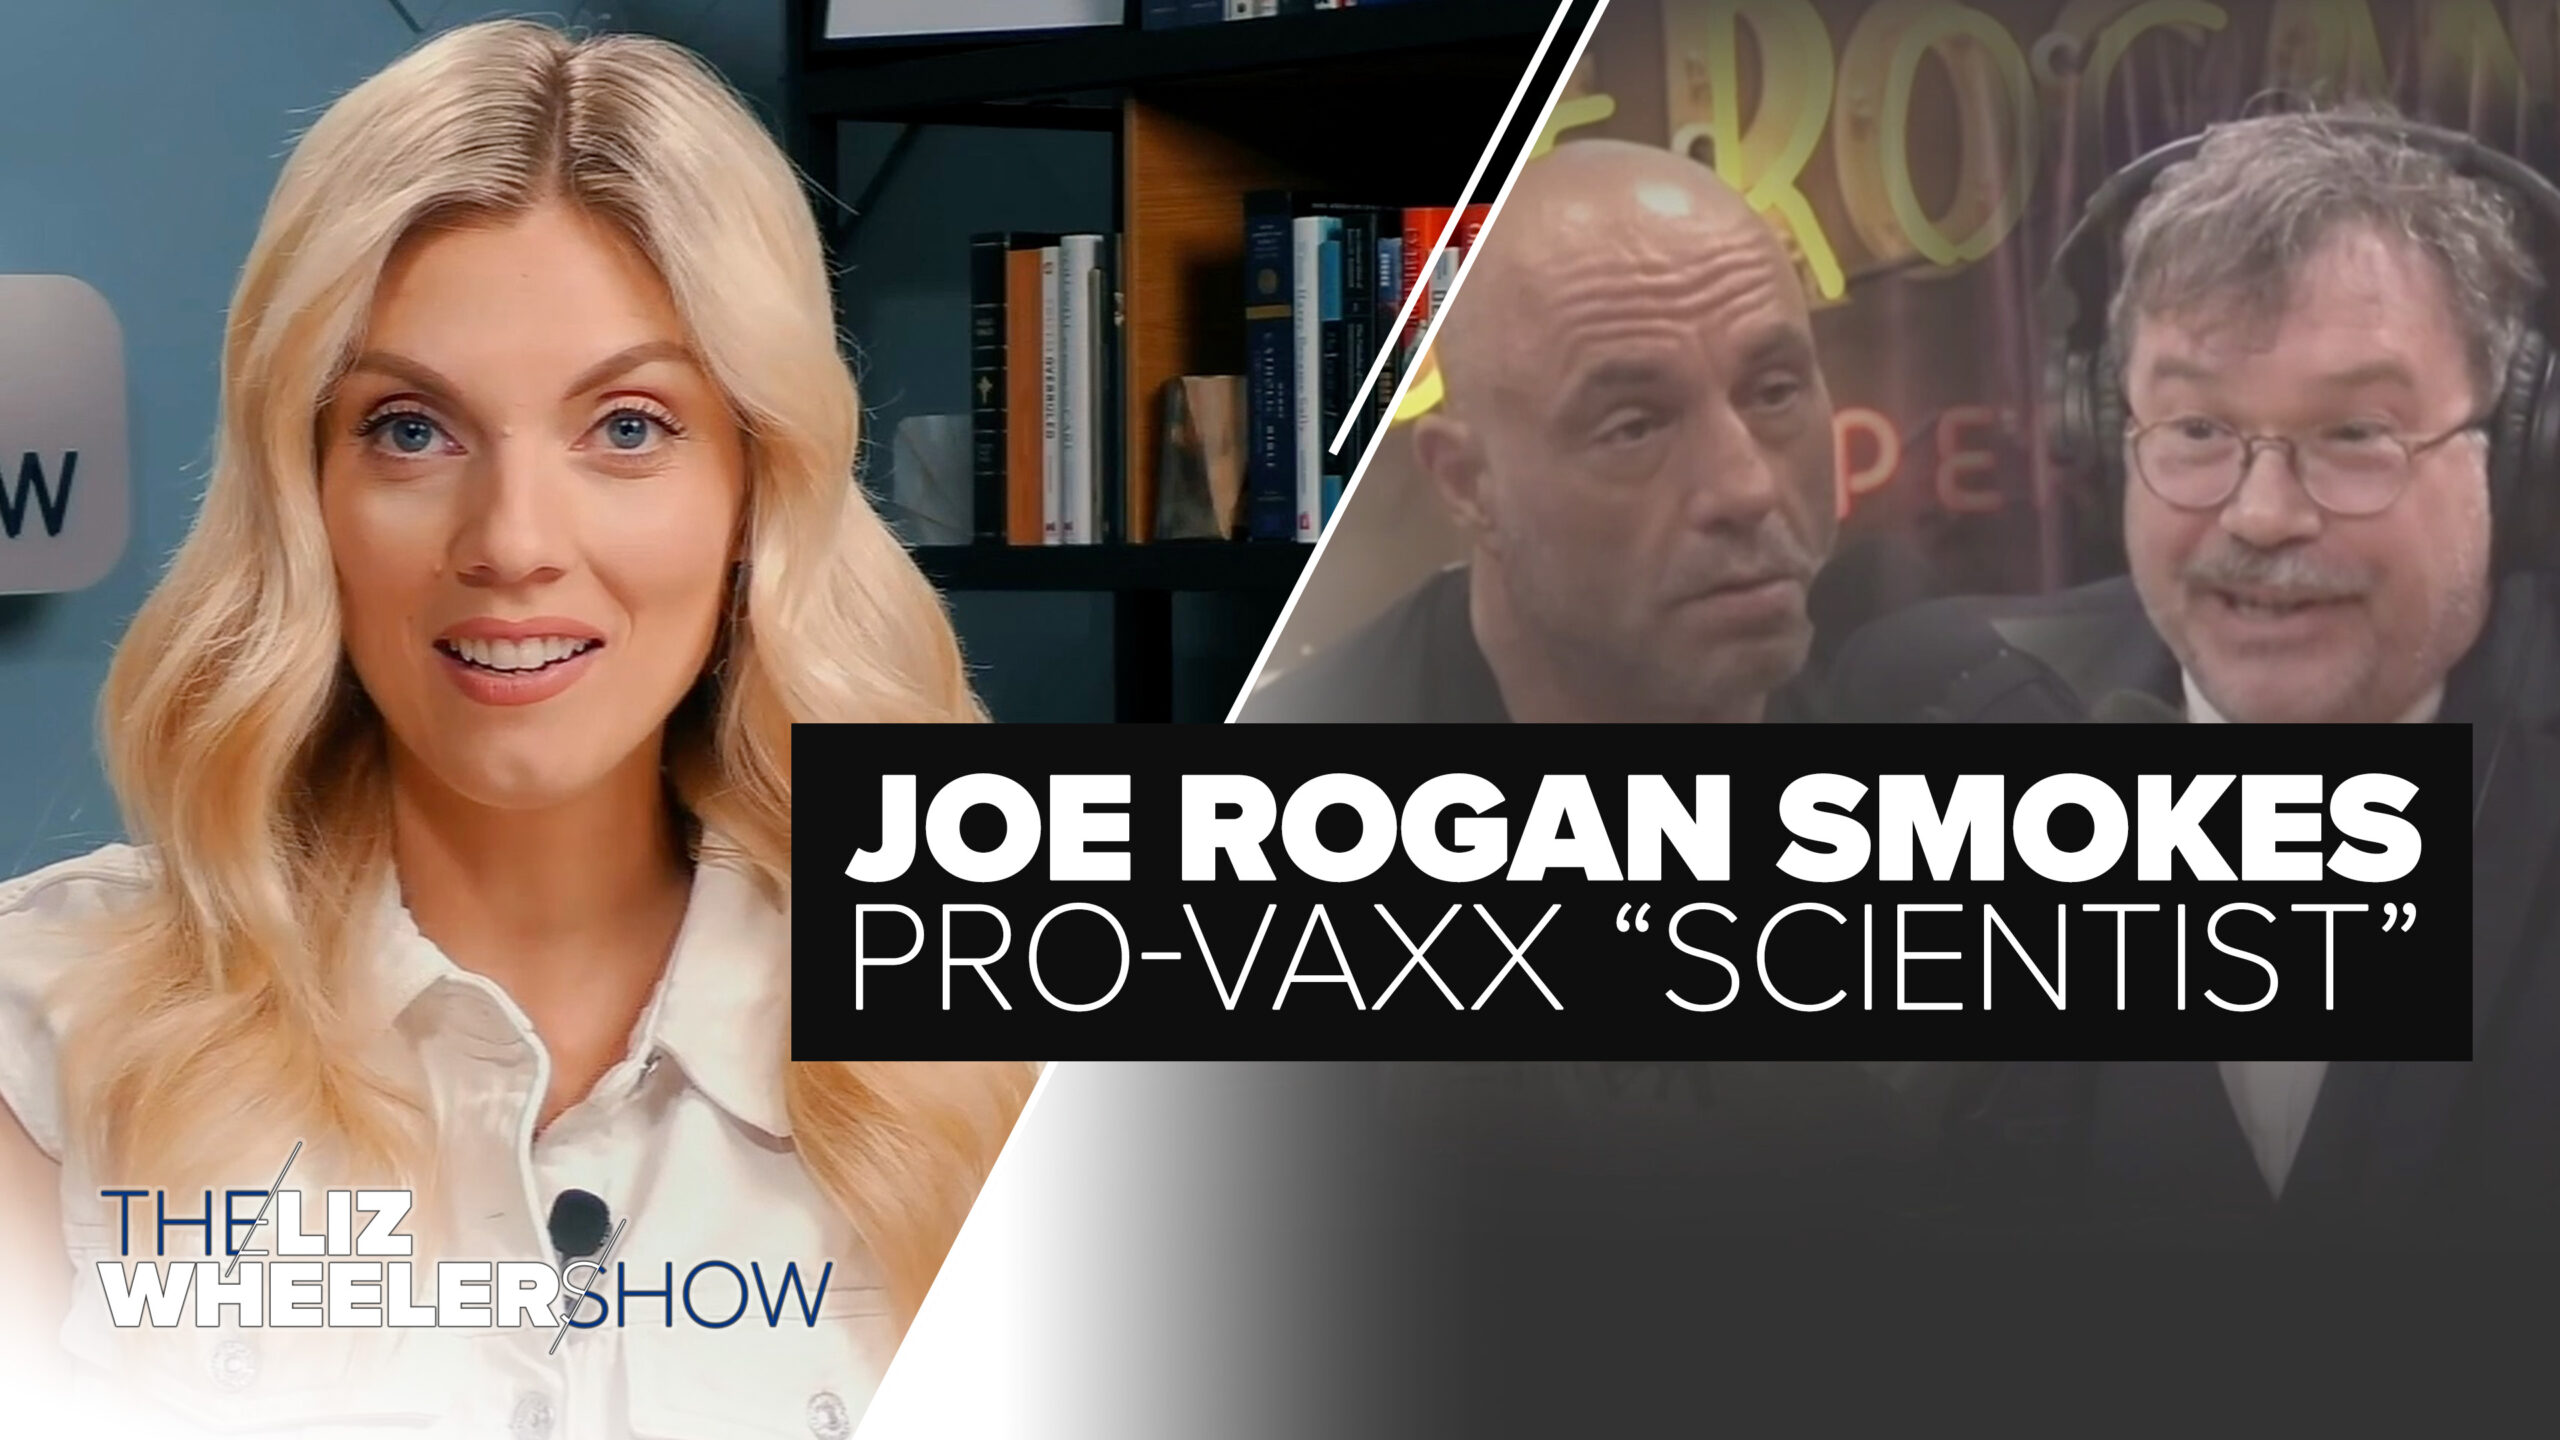 Joe Rogan and Peter Hotez debate vaccines on The Joe Rogan Show